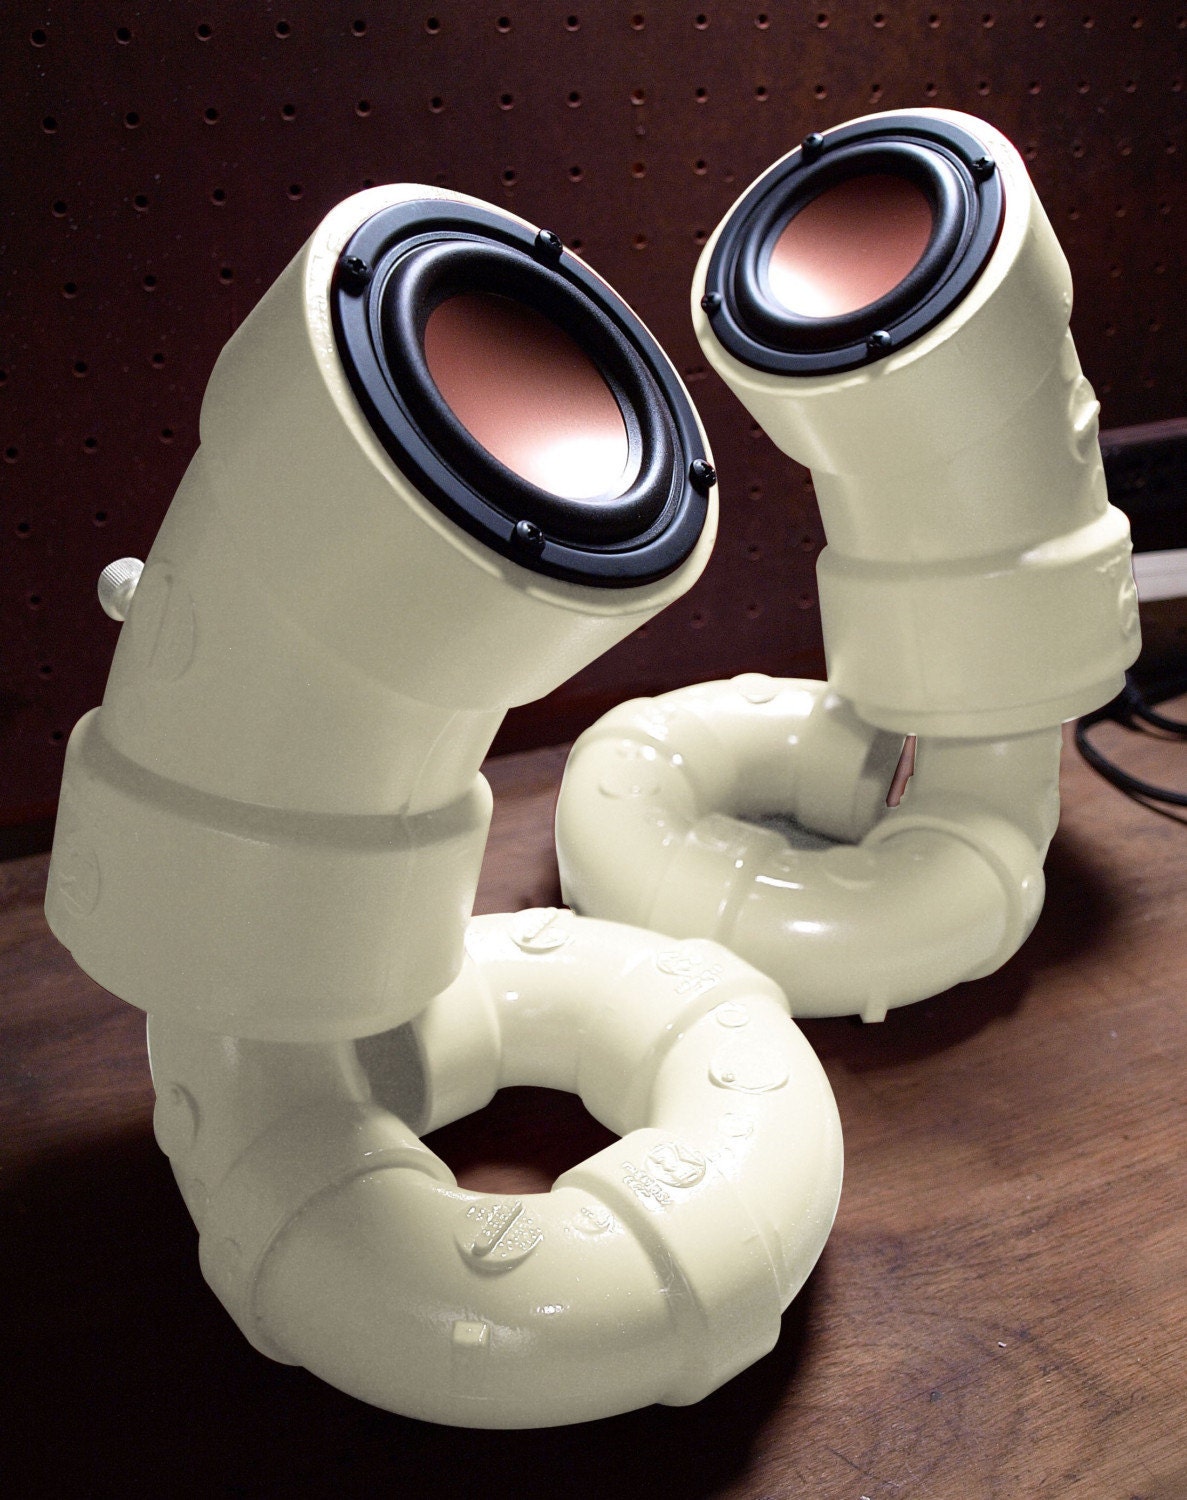 ikyaudio white sea cucumbers audio speakers - Design Copyright Pending